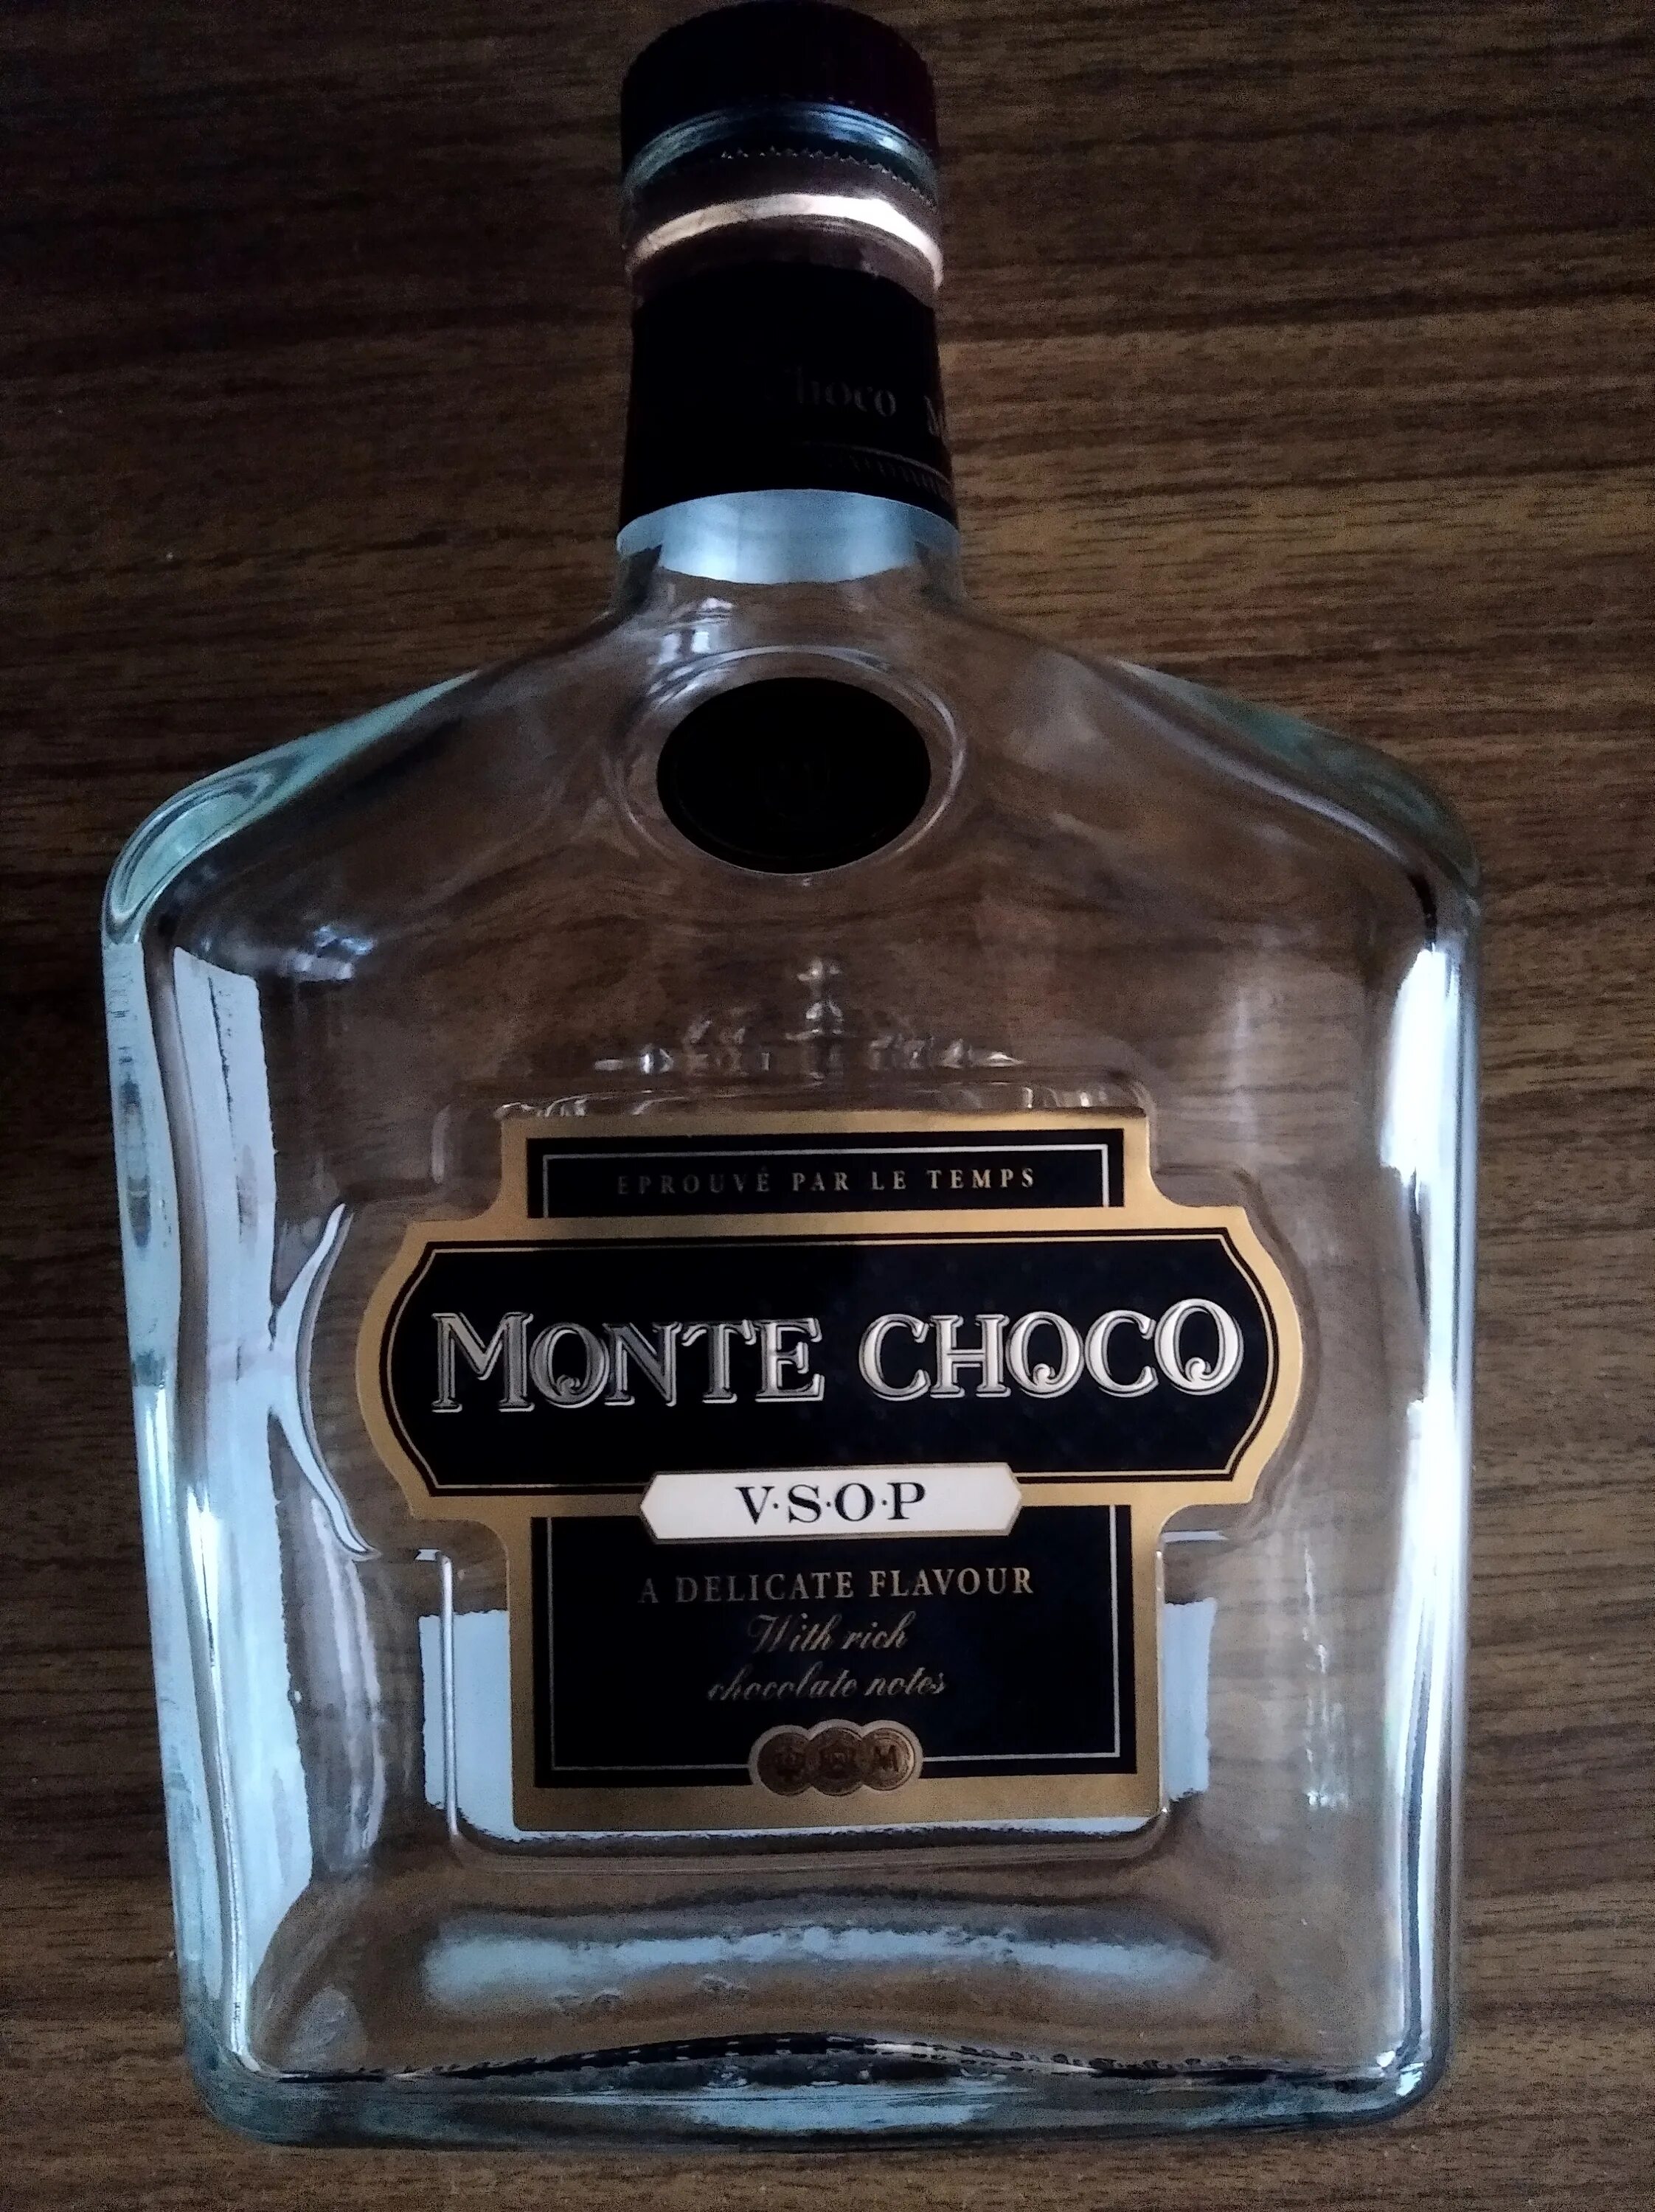 Коктейль монте шоко. Монте Чоко коньяк. Коньячный напиток Монте шоко. Коньяк Монте Чоко VSOP. Monte Choco коньяк шоколадный.